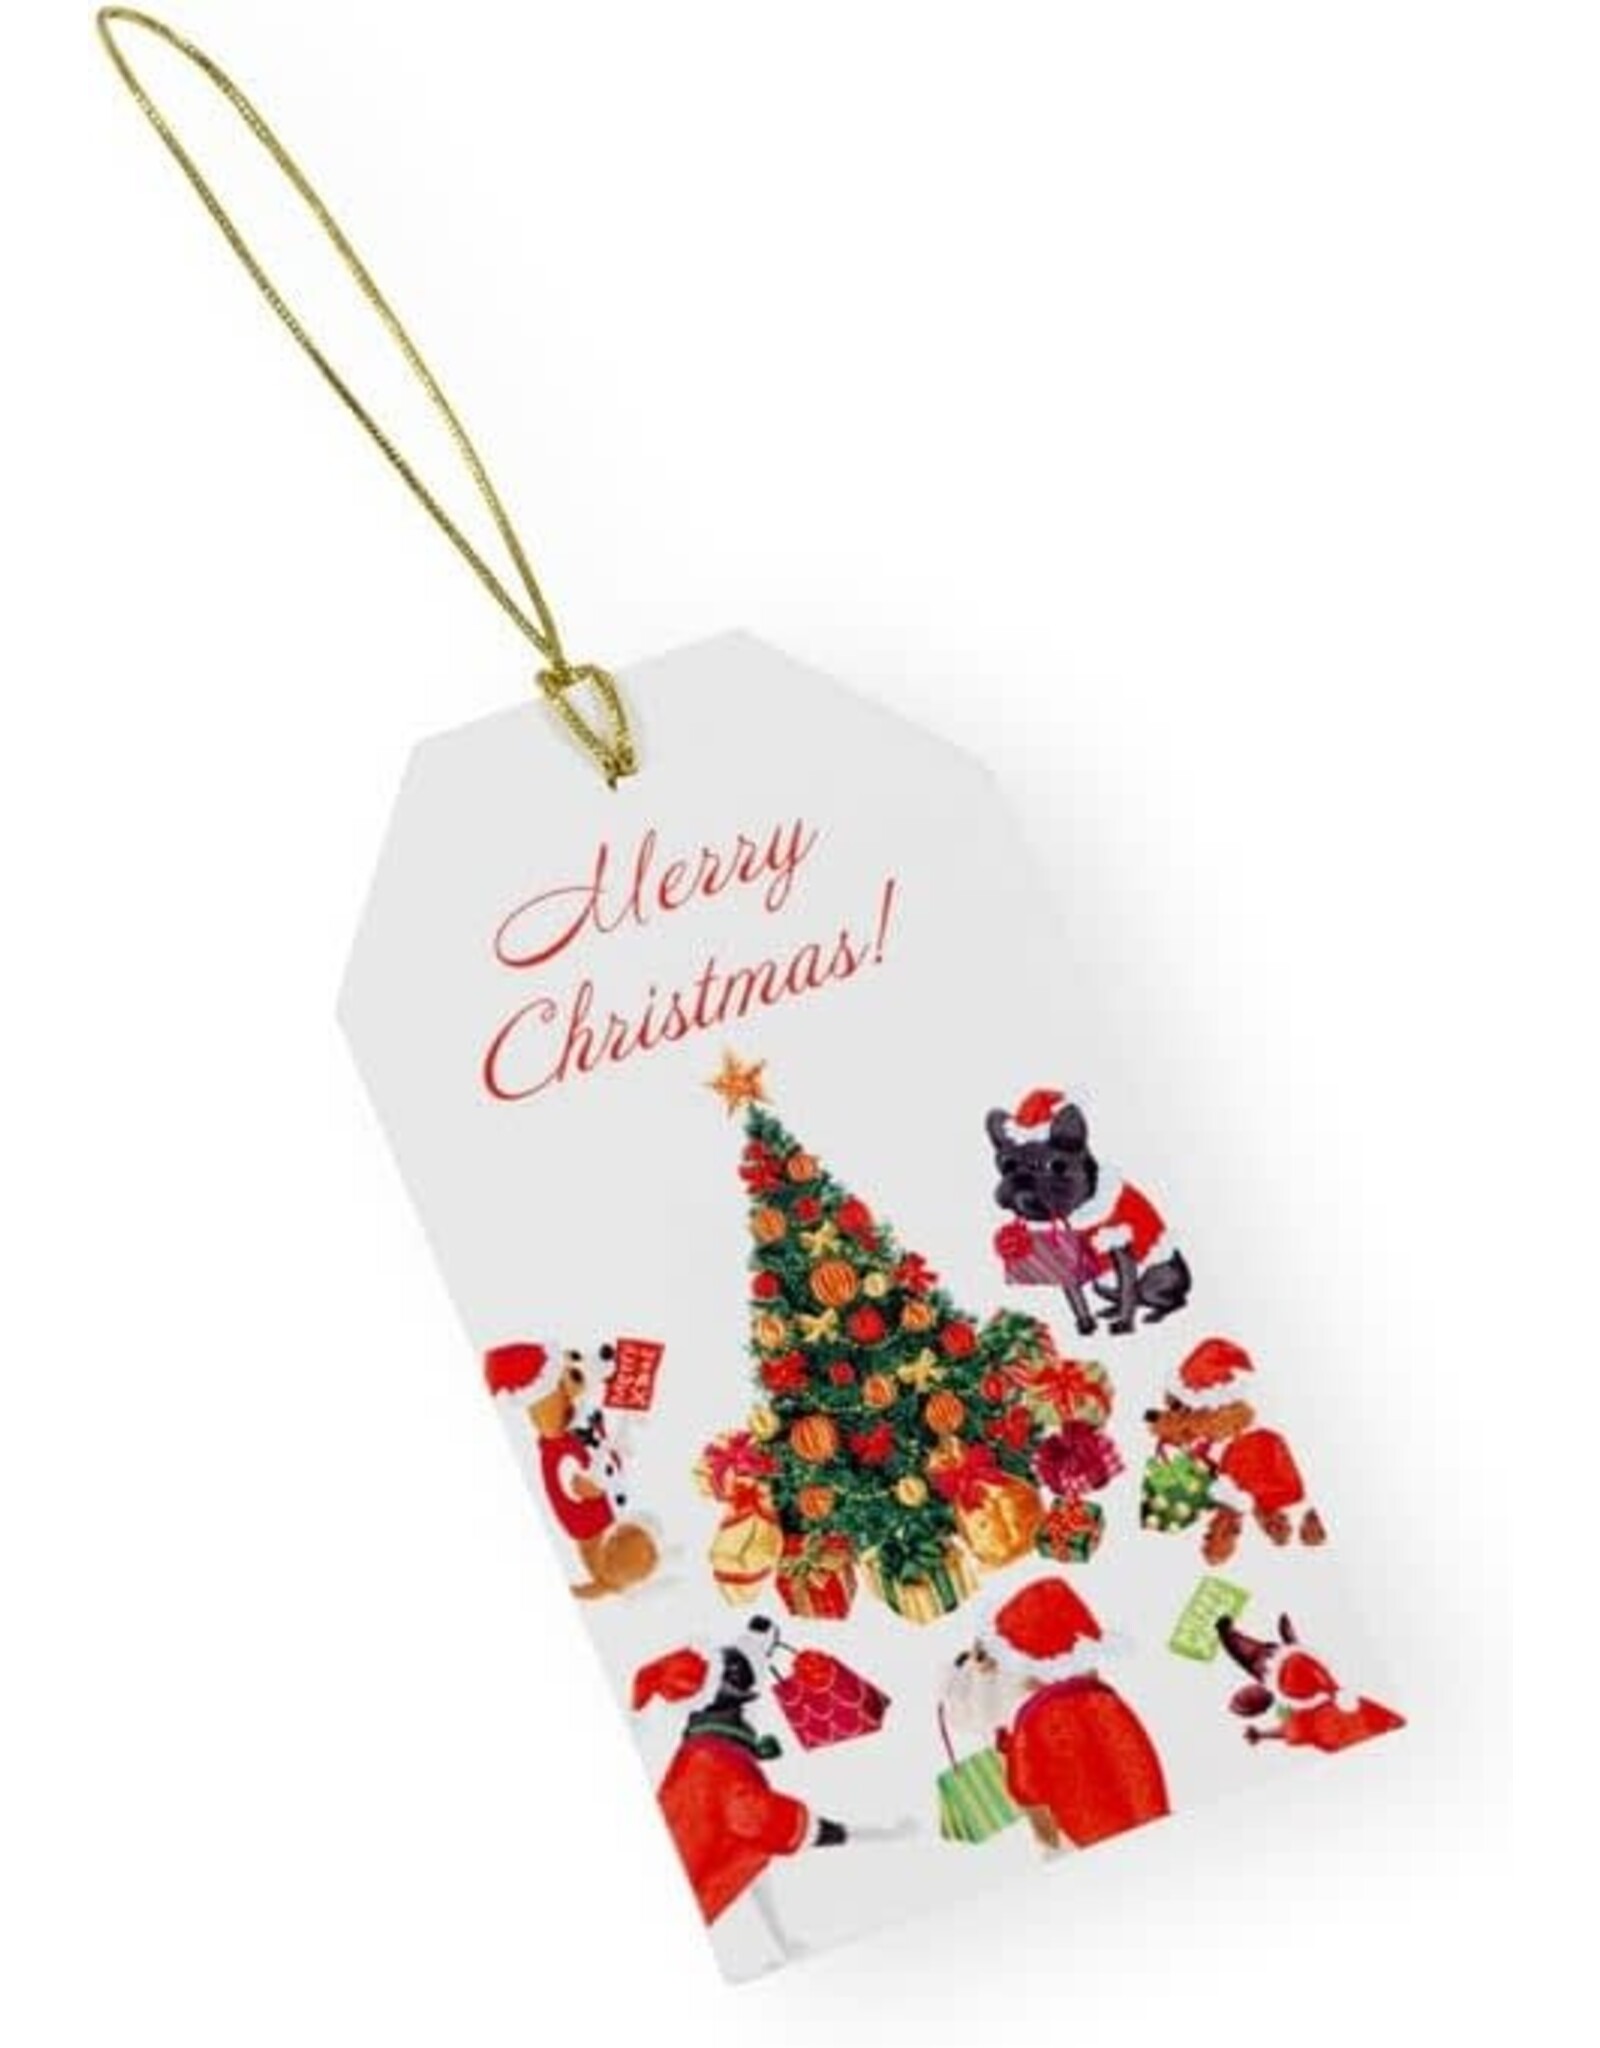 Caspari Classic Hanging Gift Tags 4pk Dogs Around Christmas Tree